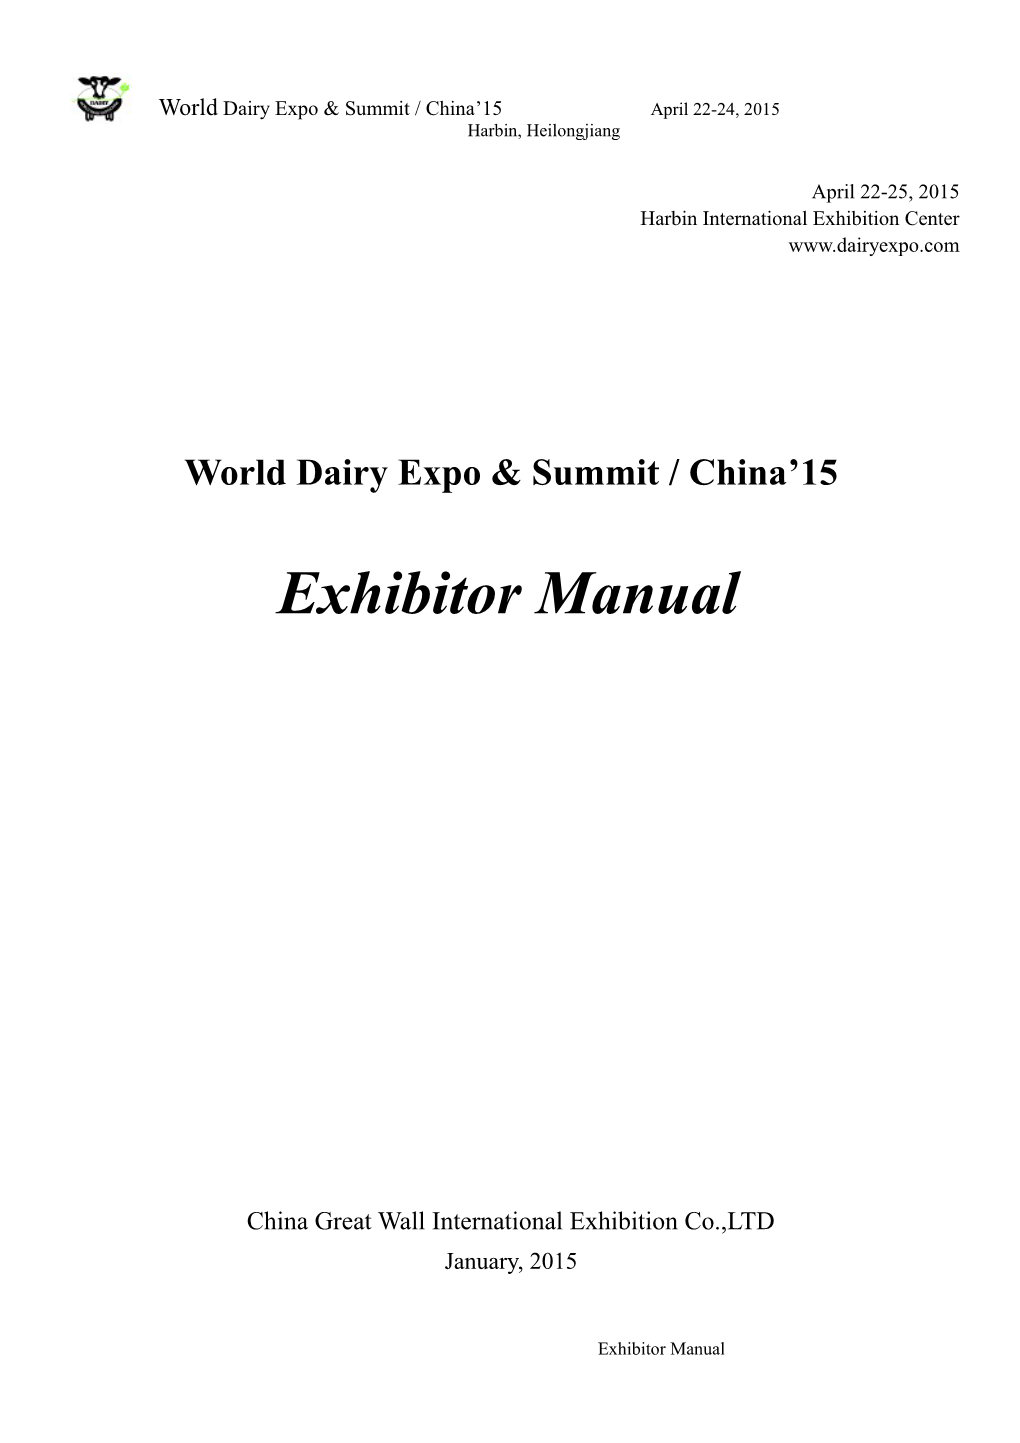 World Dairy Exposummit/China 15 April 22-24, 2015